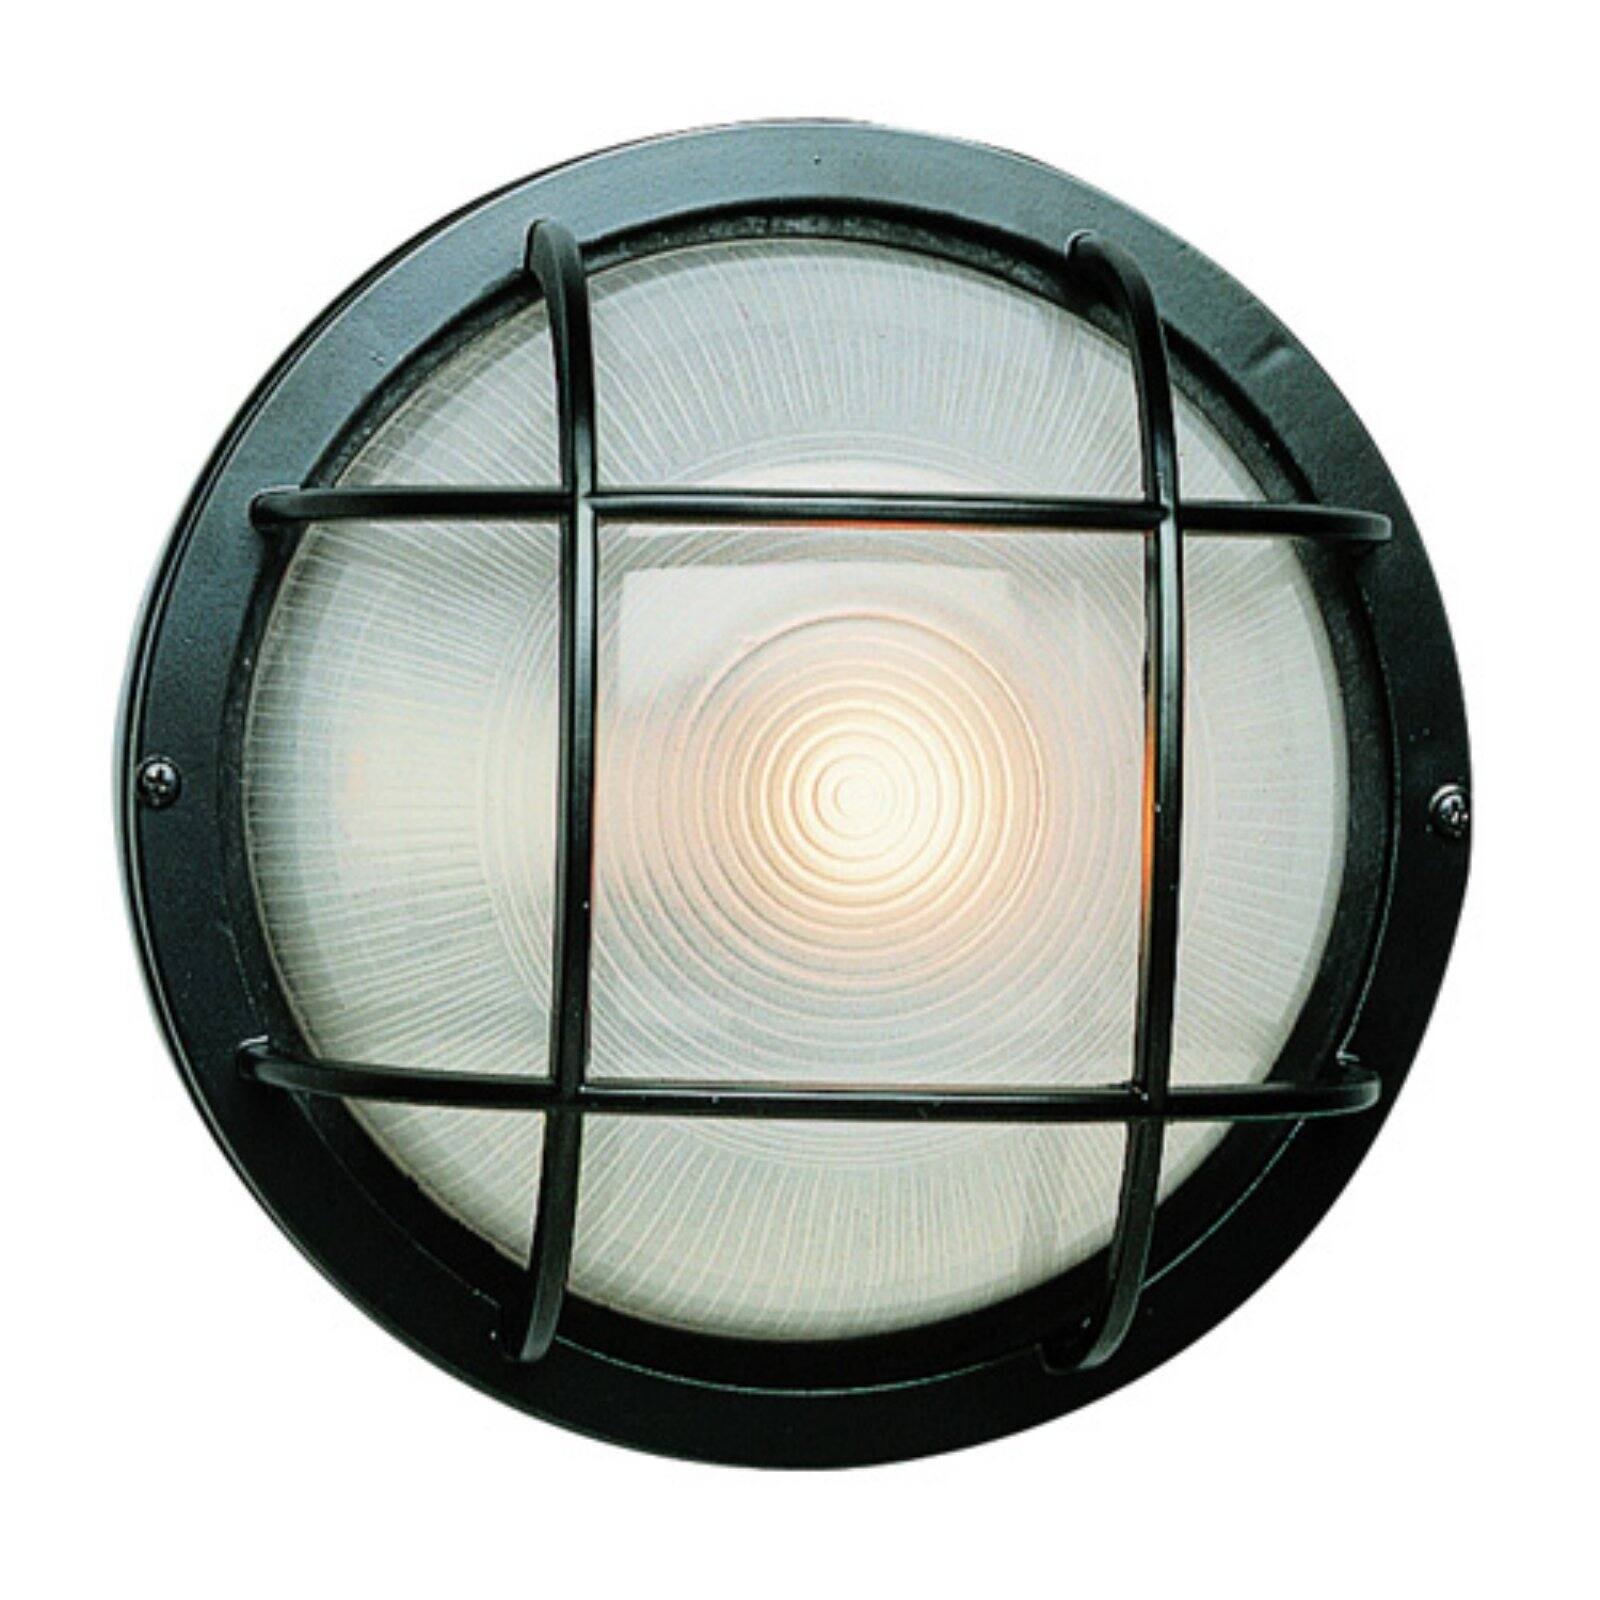 Trans Globe Lighting - The Standard - One Light Medium Bulkhead-Rust Finish - image 2 of 2